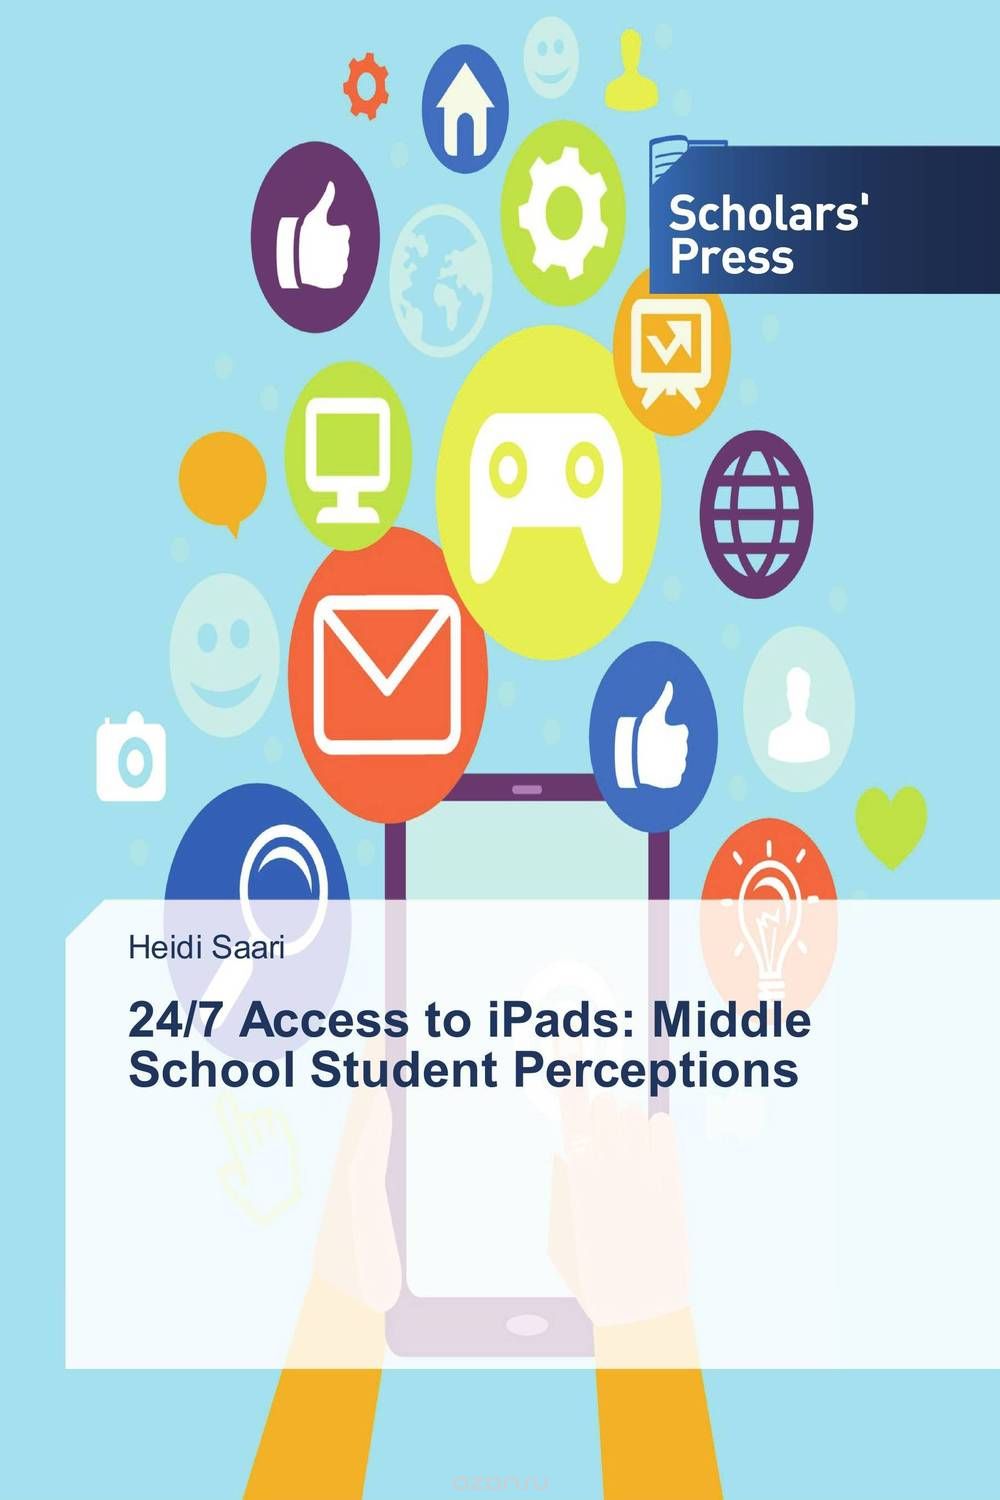 Скачать книгу "24/7 Access to iPads: Middle School Student Perceptions"